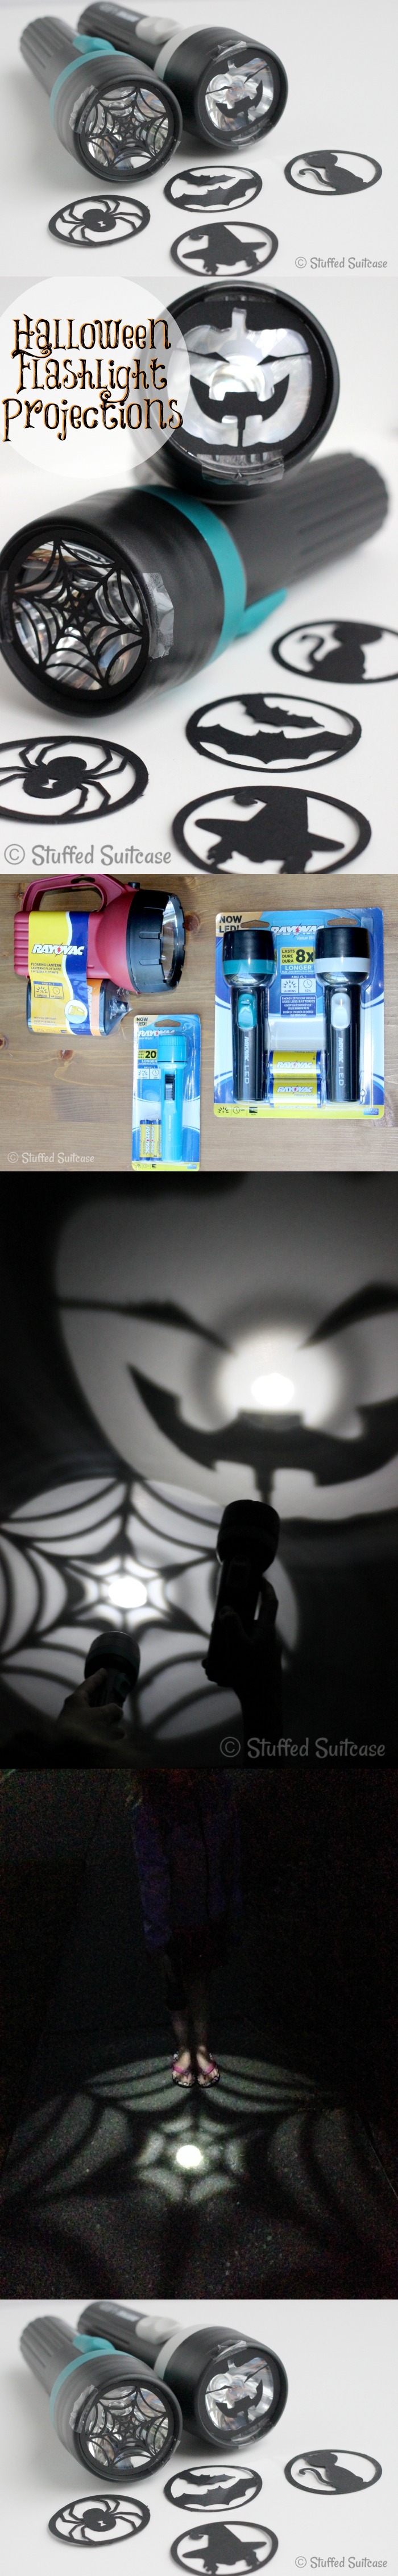 6. Halloween Flashlight Projection Craft